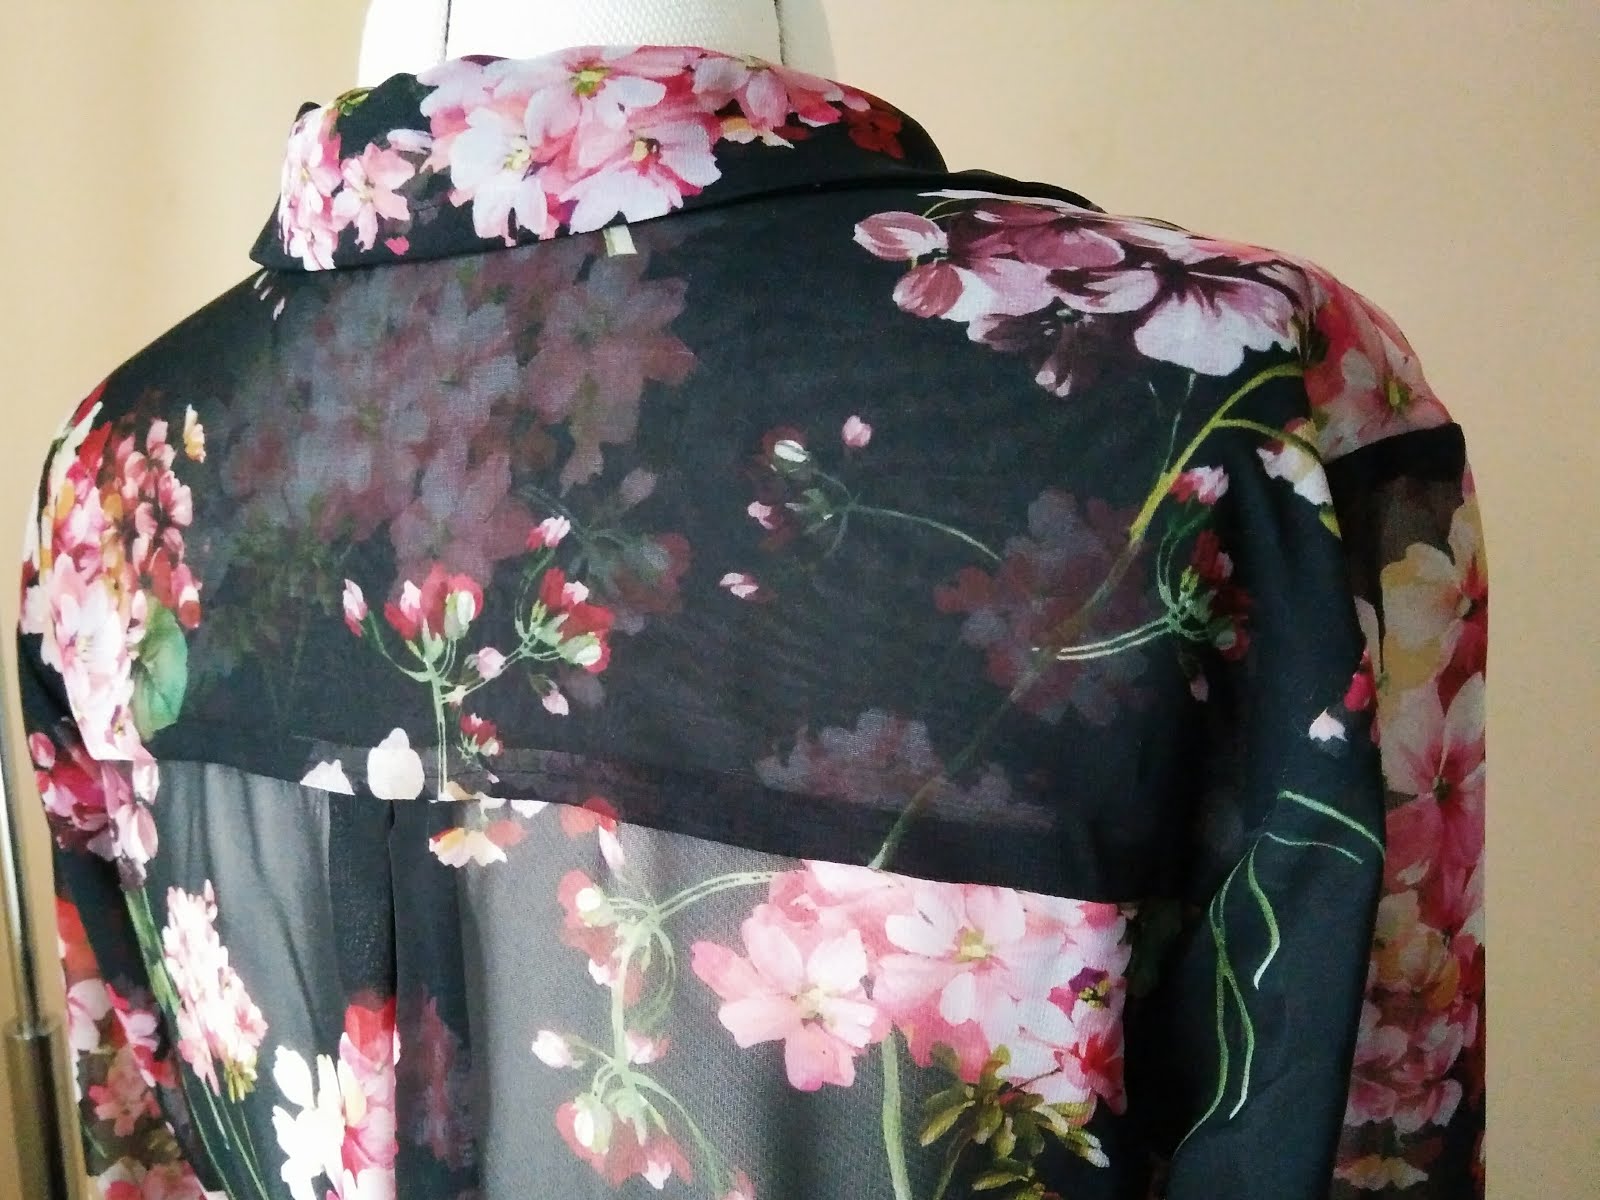 Floral chiffon Alex shirt dress from Sew Over It My Capsule Wardrobe: City Break ebook